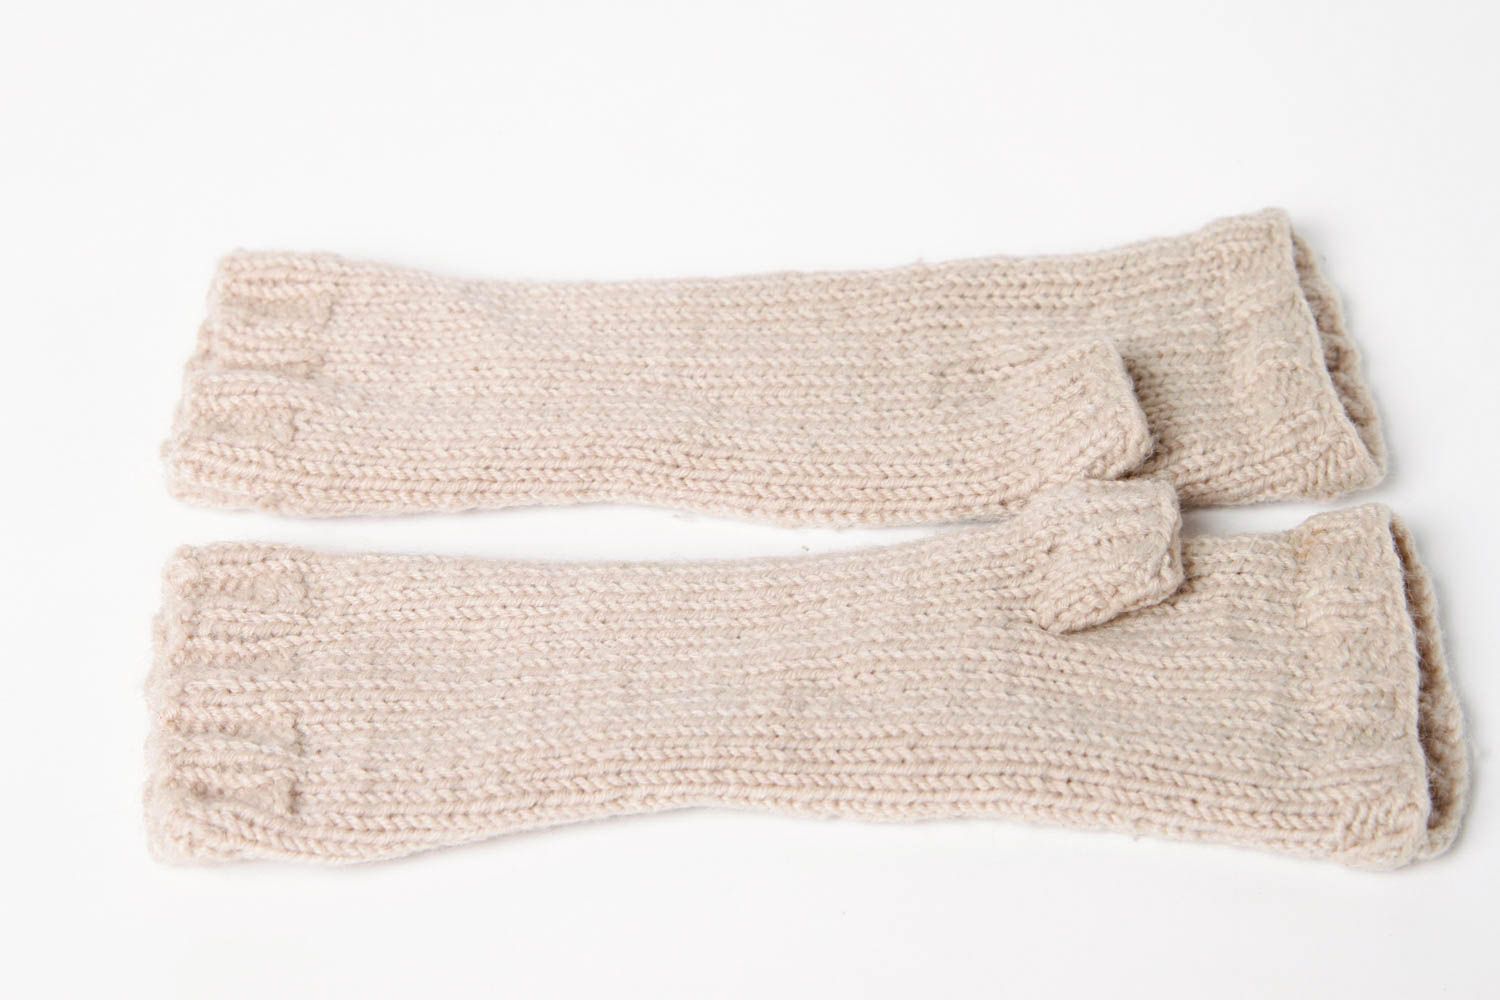 Handmade knitted mittens winter mittens winter accessories stylish mittens photo 9